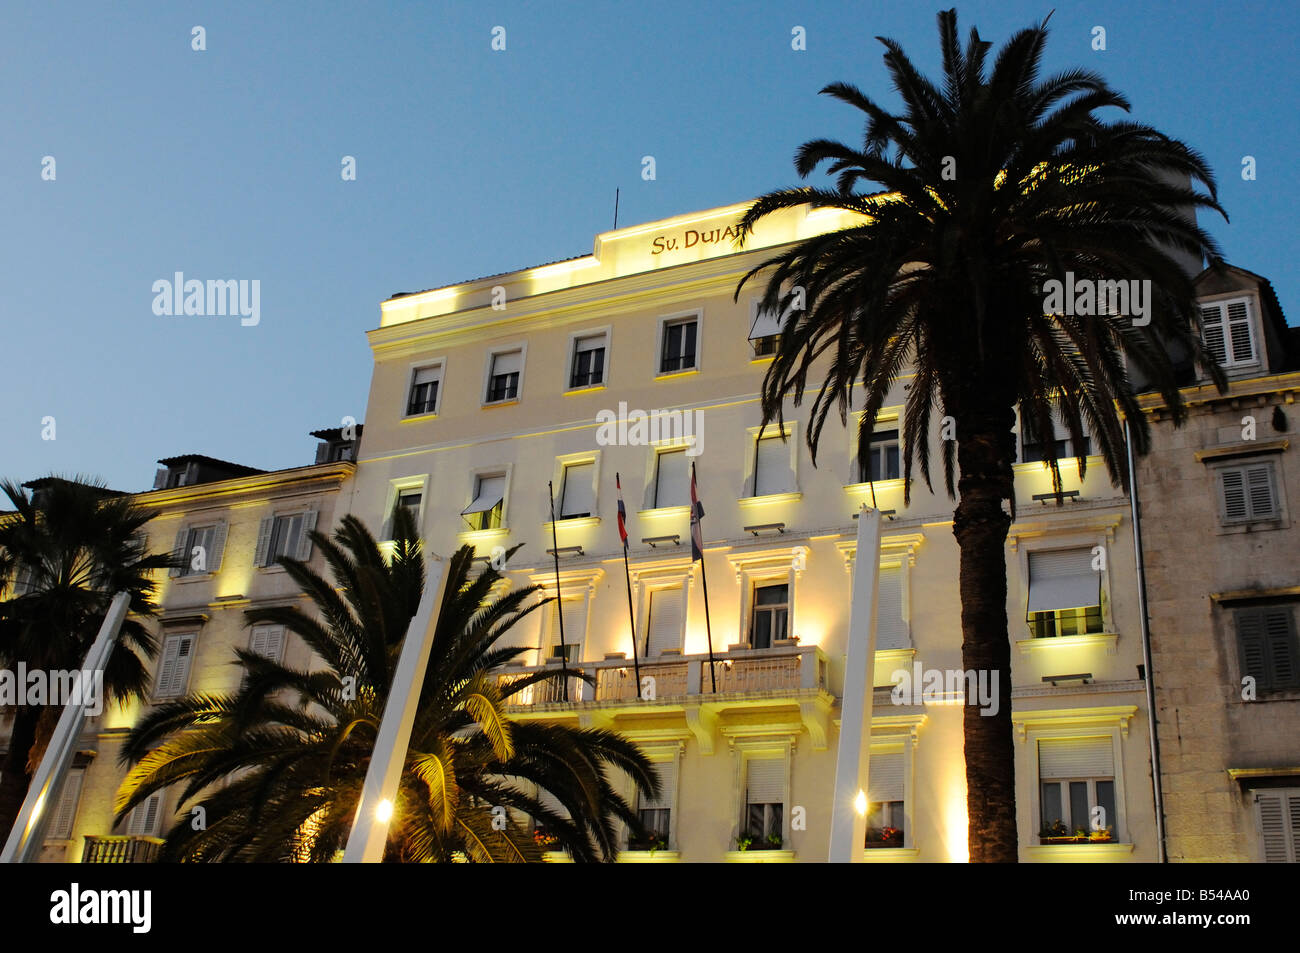 Hotel St Dujam on The Riva waterfront at dusk Split Croatia Stock Photo